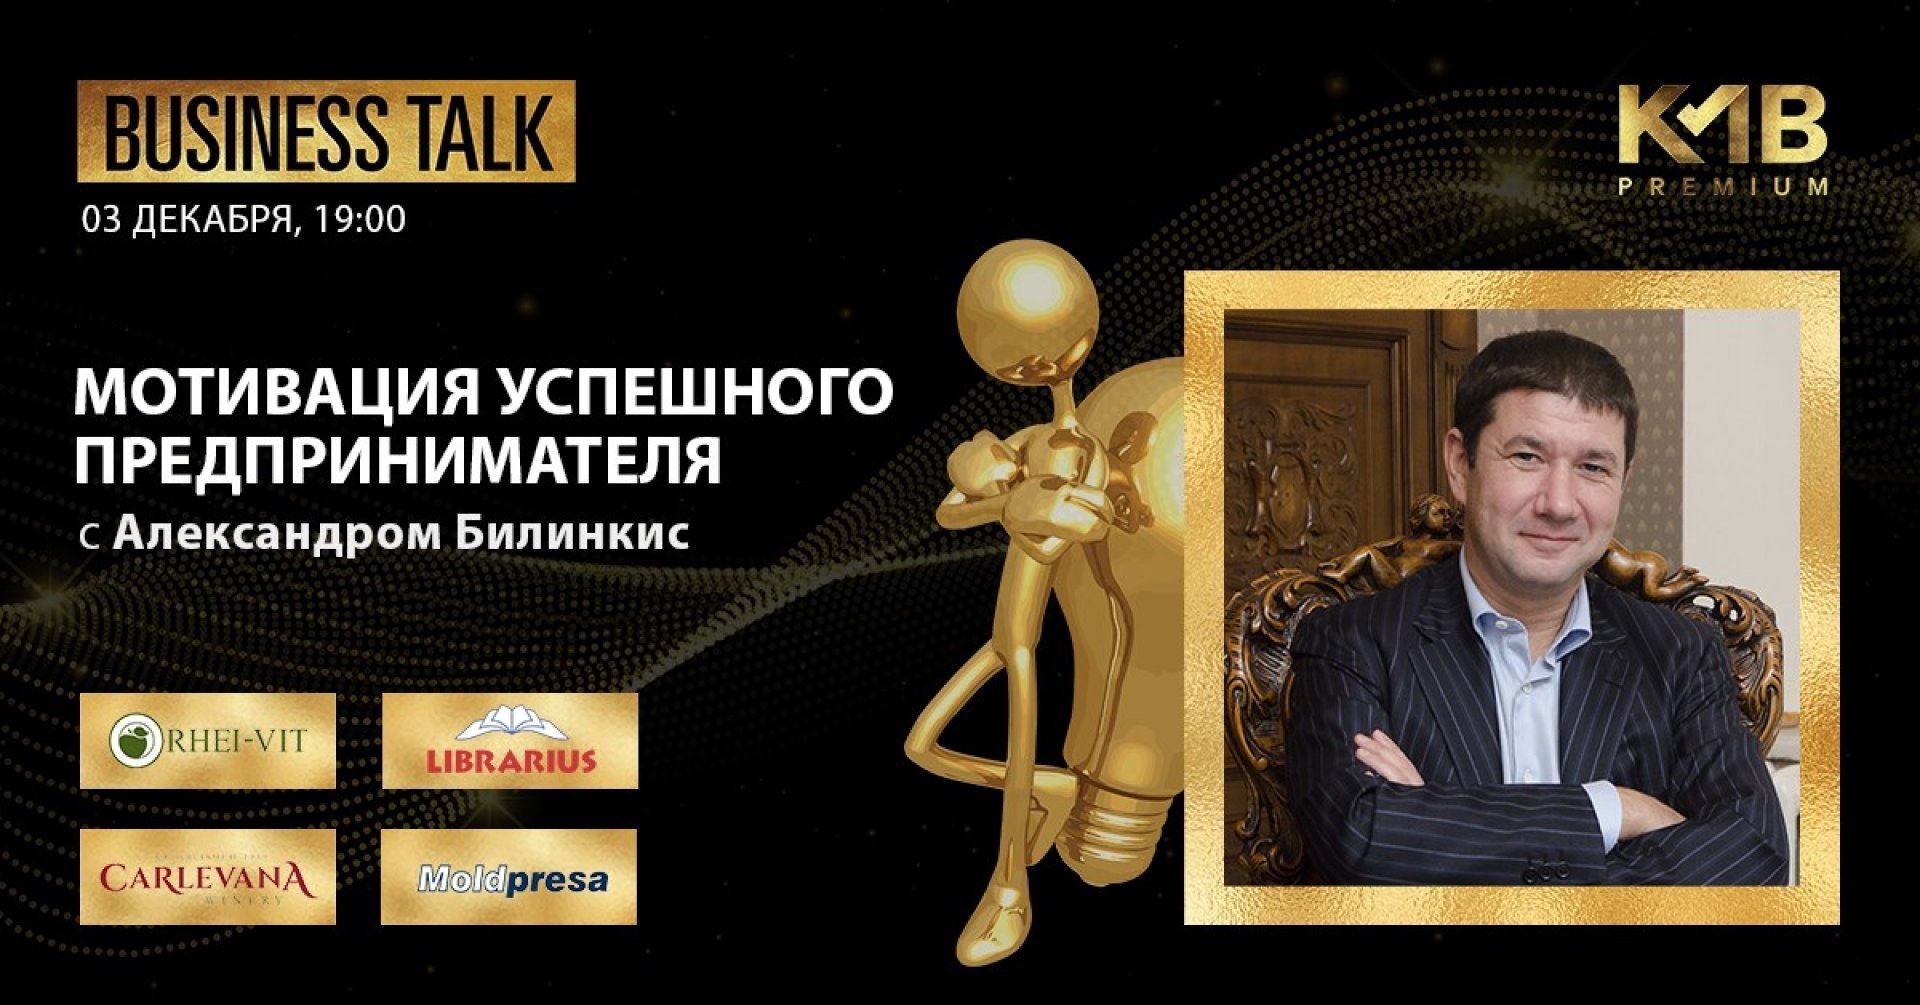 Business Talk с Александром Билинкисом в KMB Premium